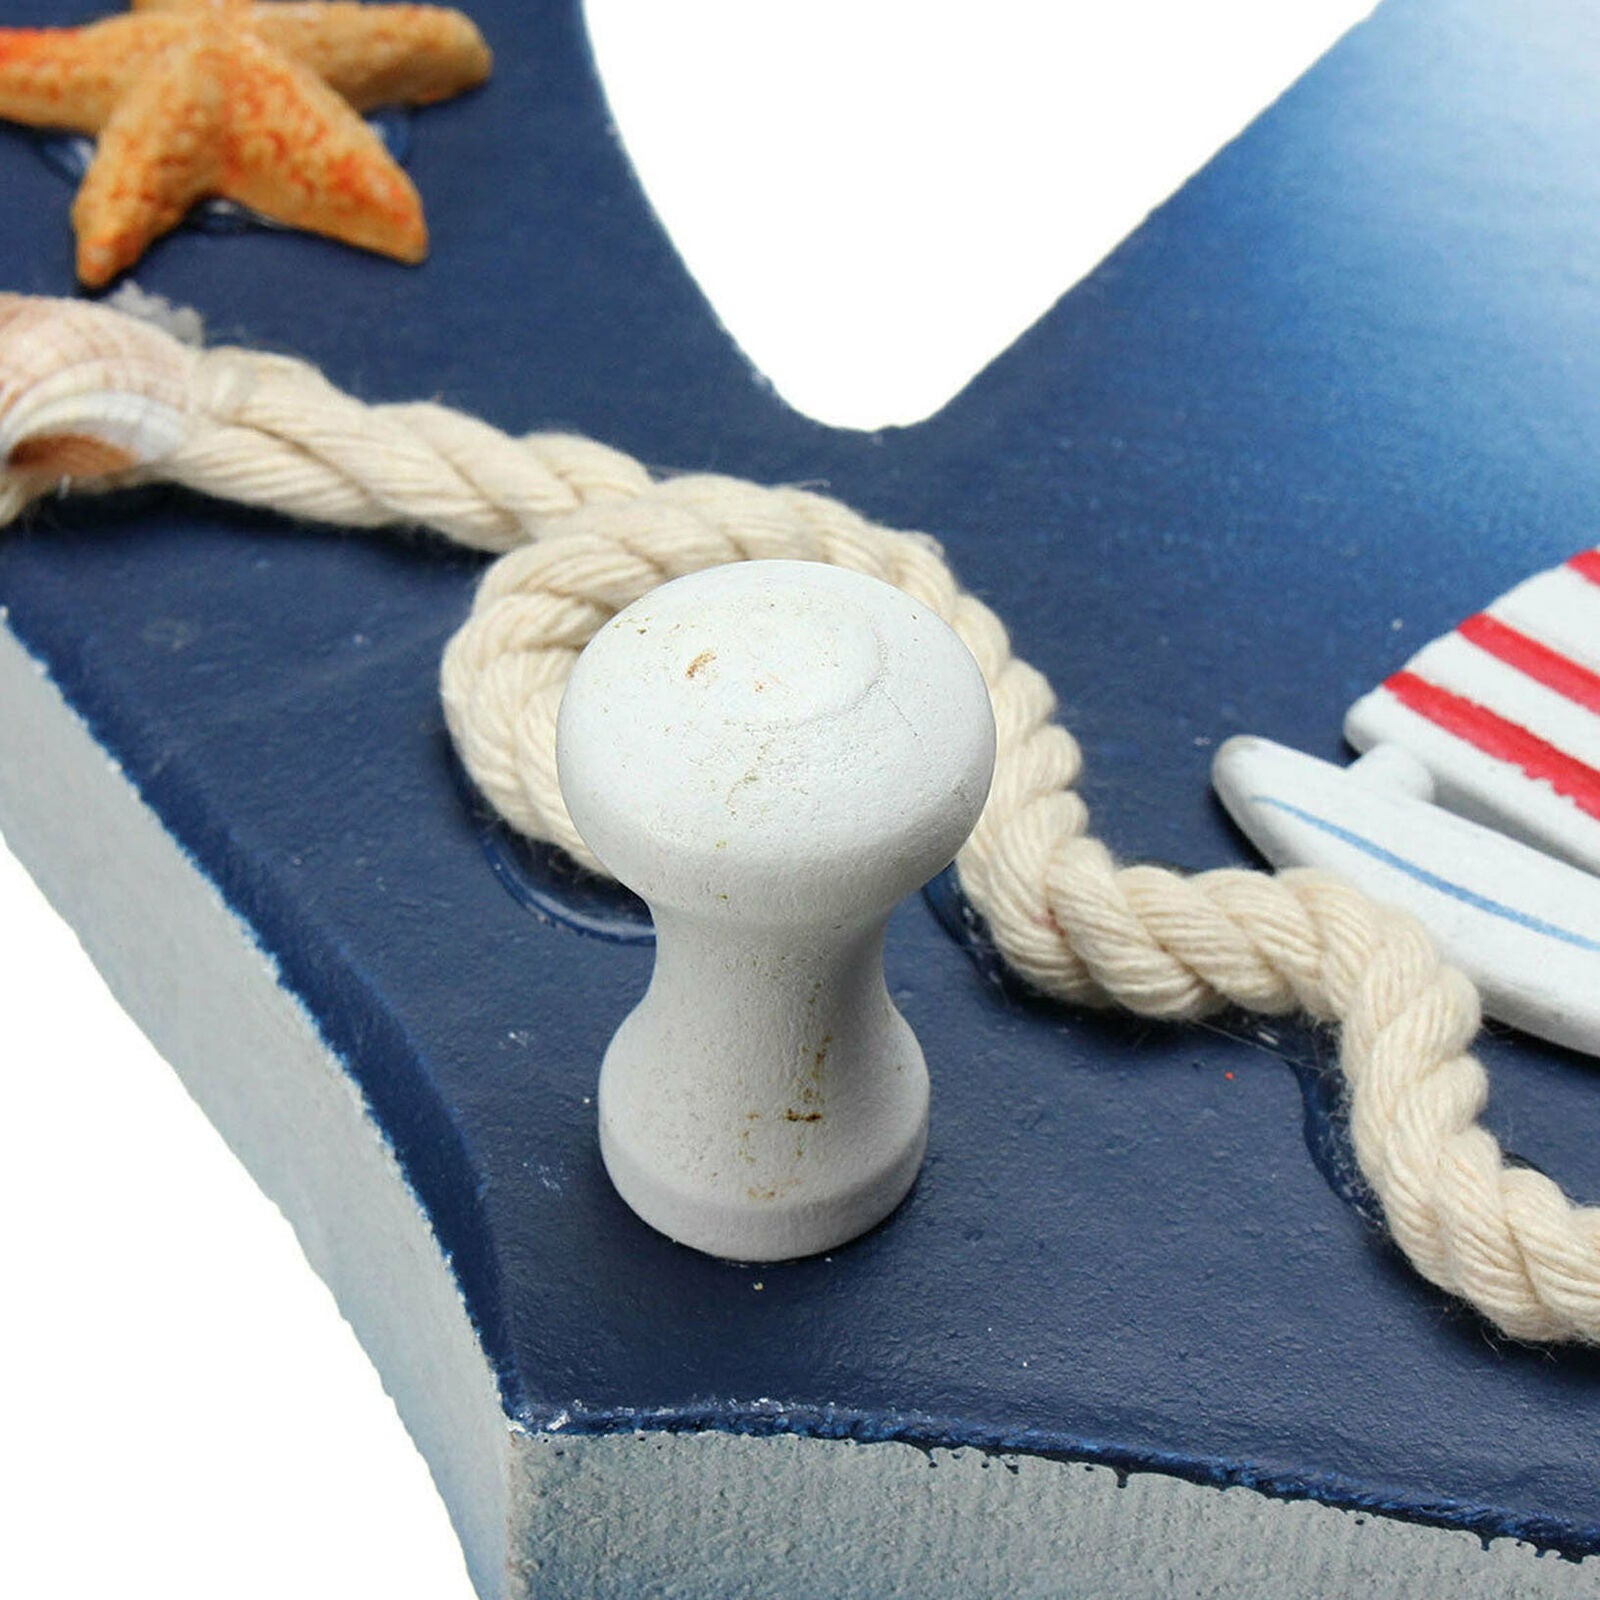 Nautical Anchor Wall Hanging Hook Ship Starfish Decor Coat Hat Kids Gift